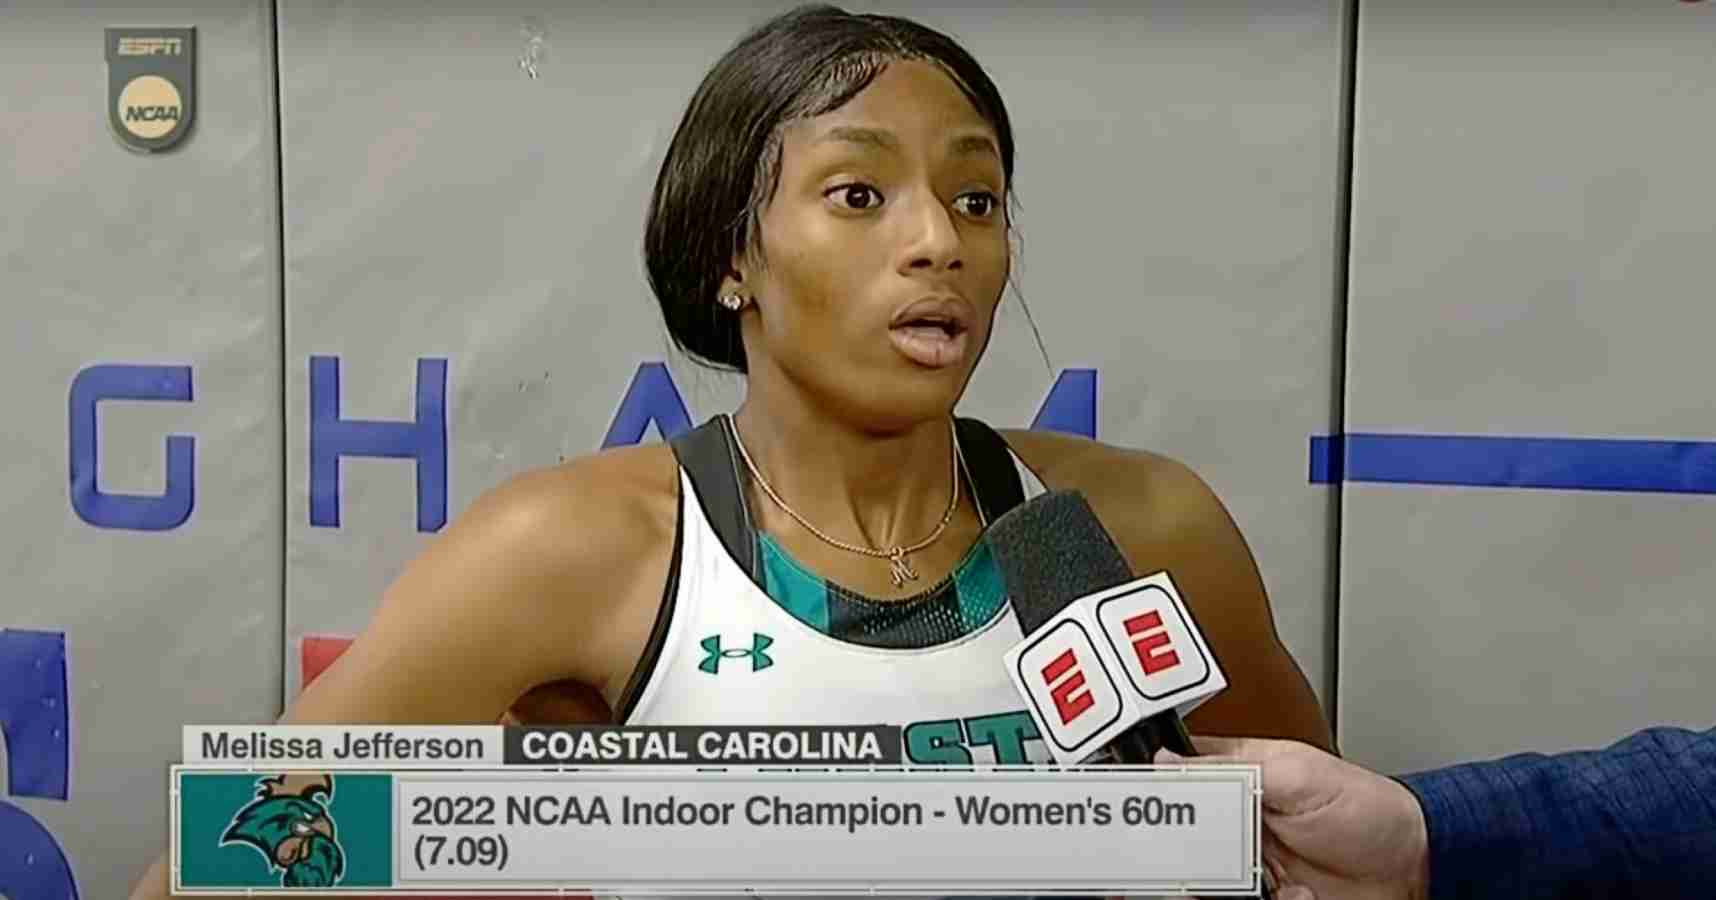 [Video] Melissa Jefferson runs 7.09 secs to win NCAA Indoor women’s 60m